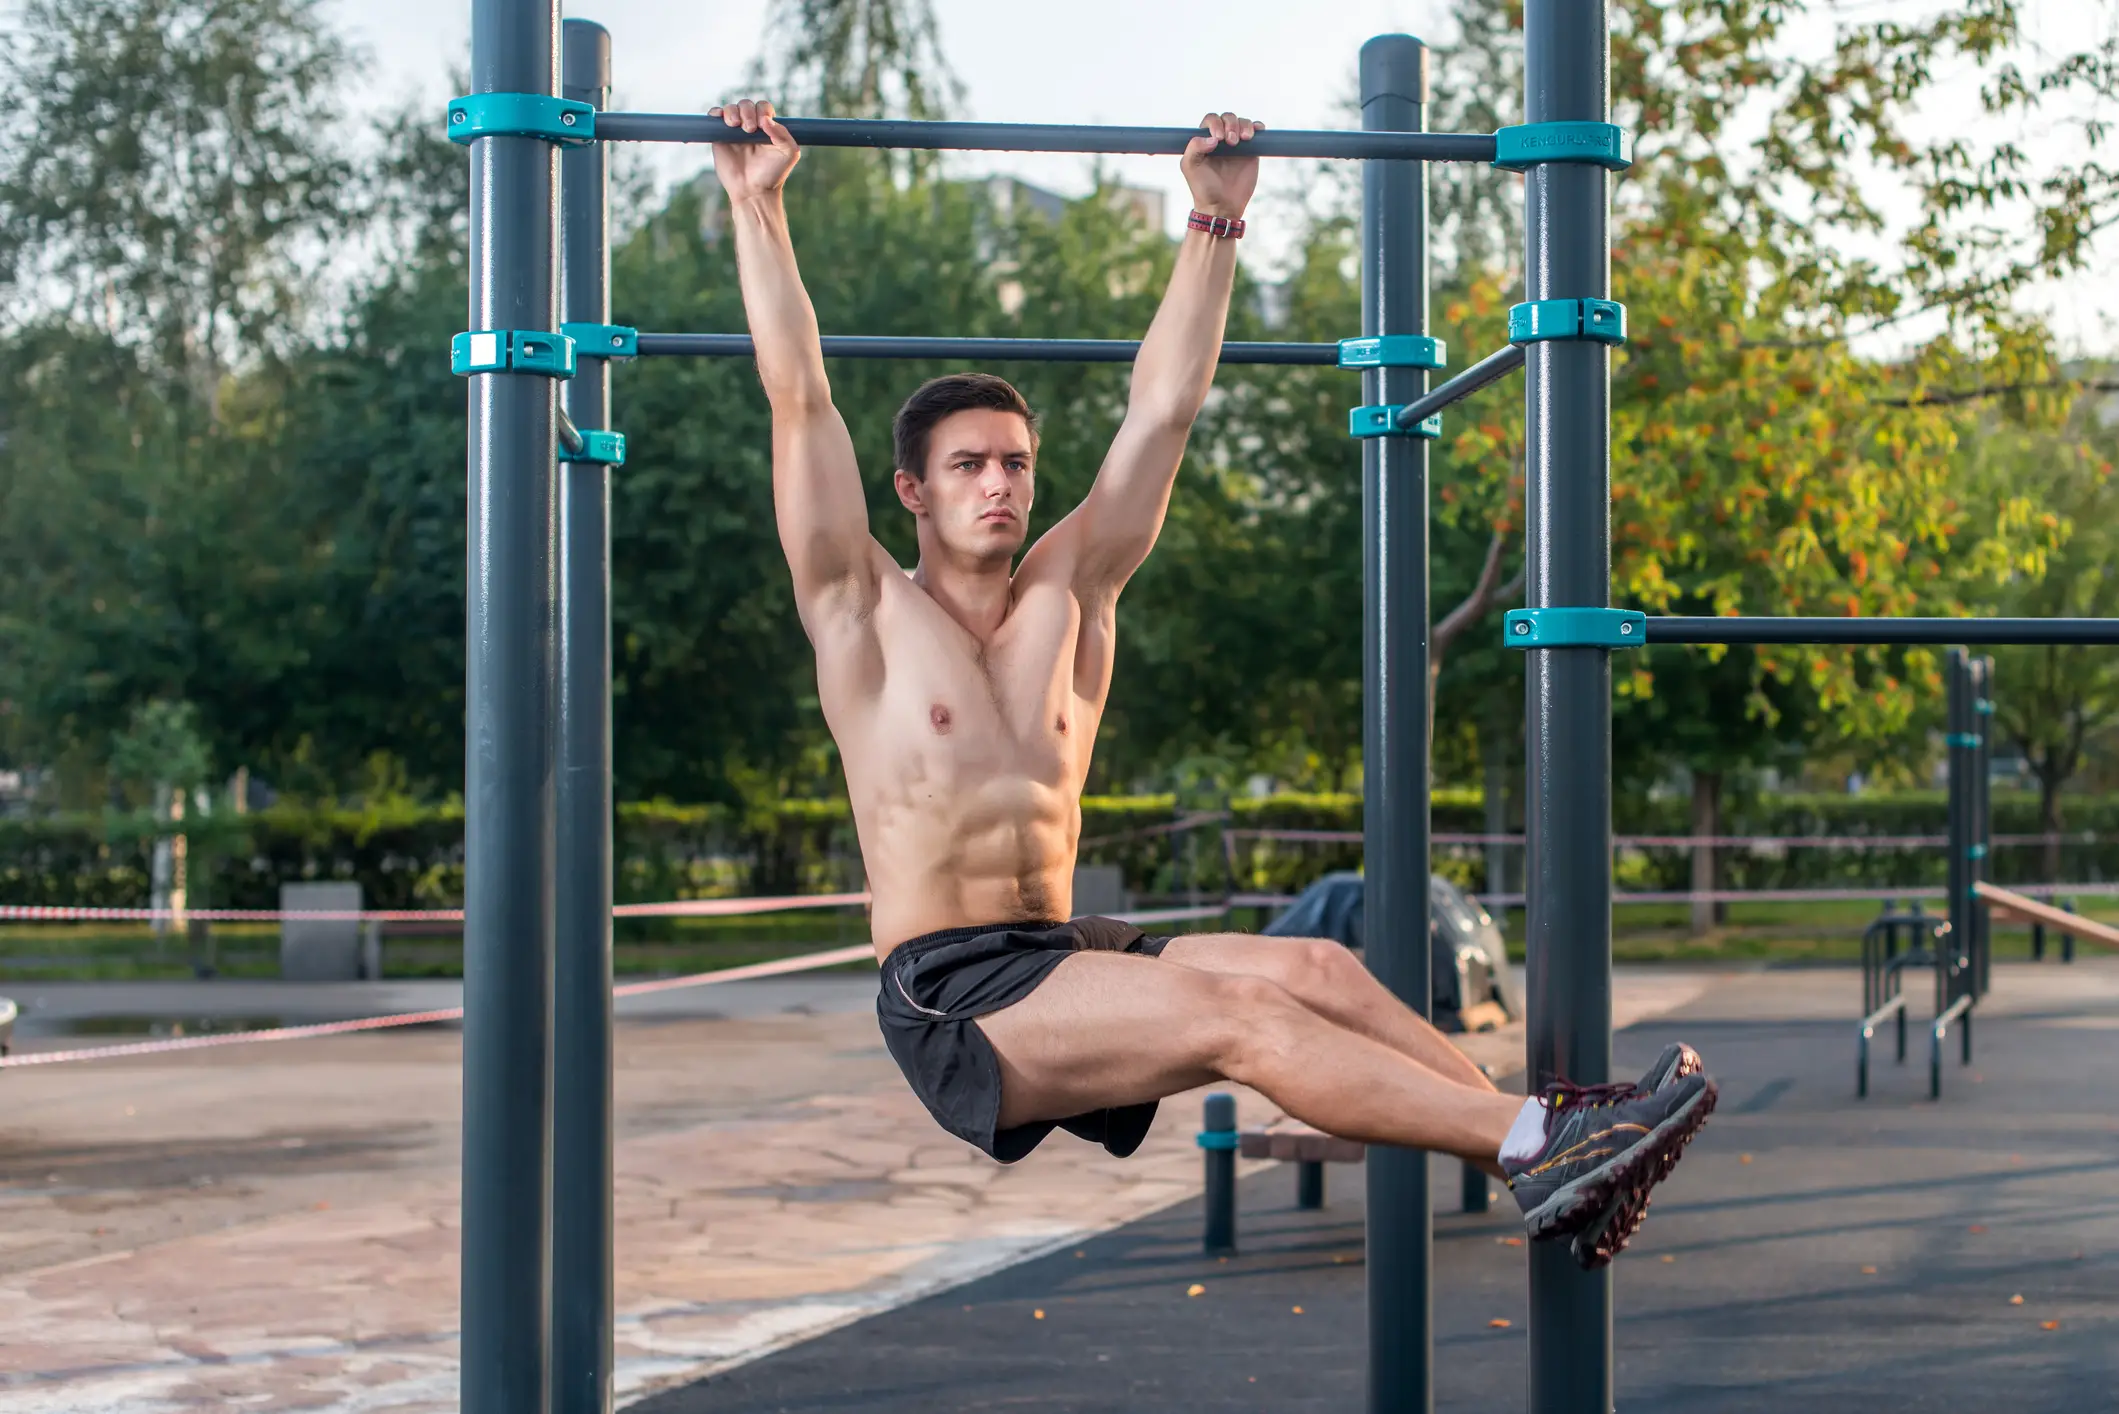 Athlete hanging on fitness station performing legs raises